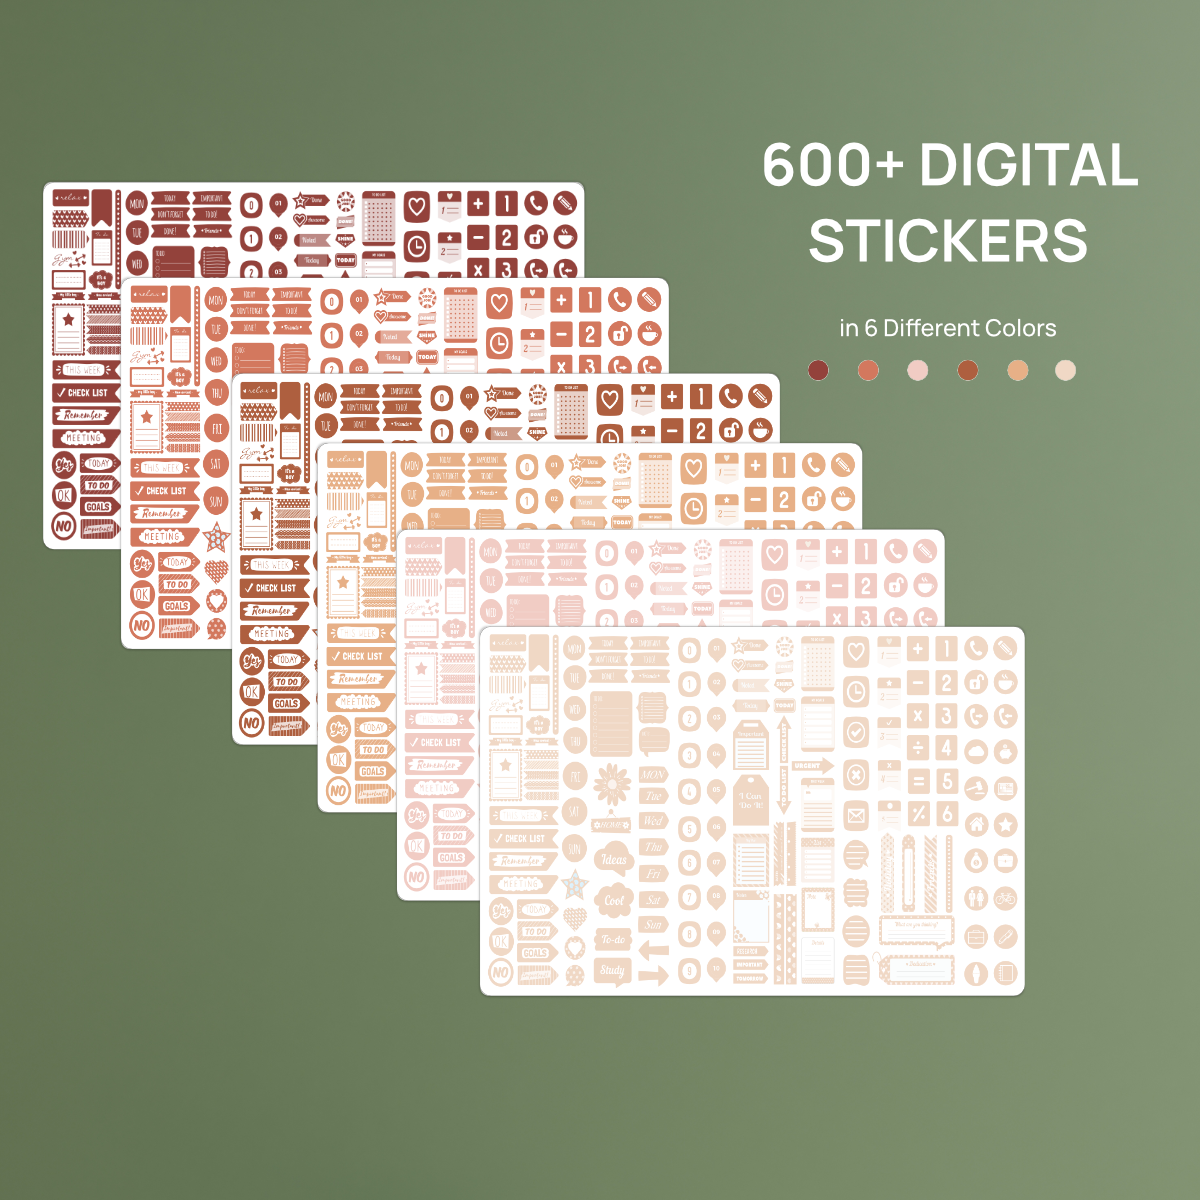 Digital Stickers